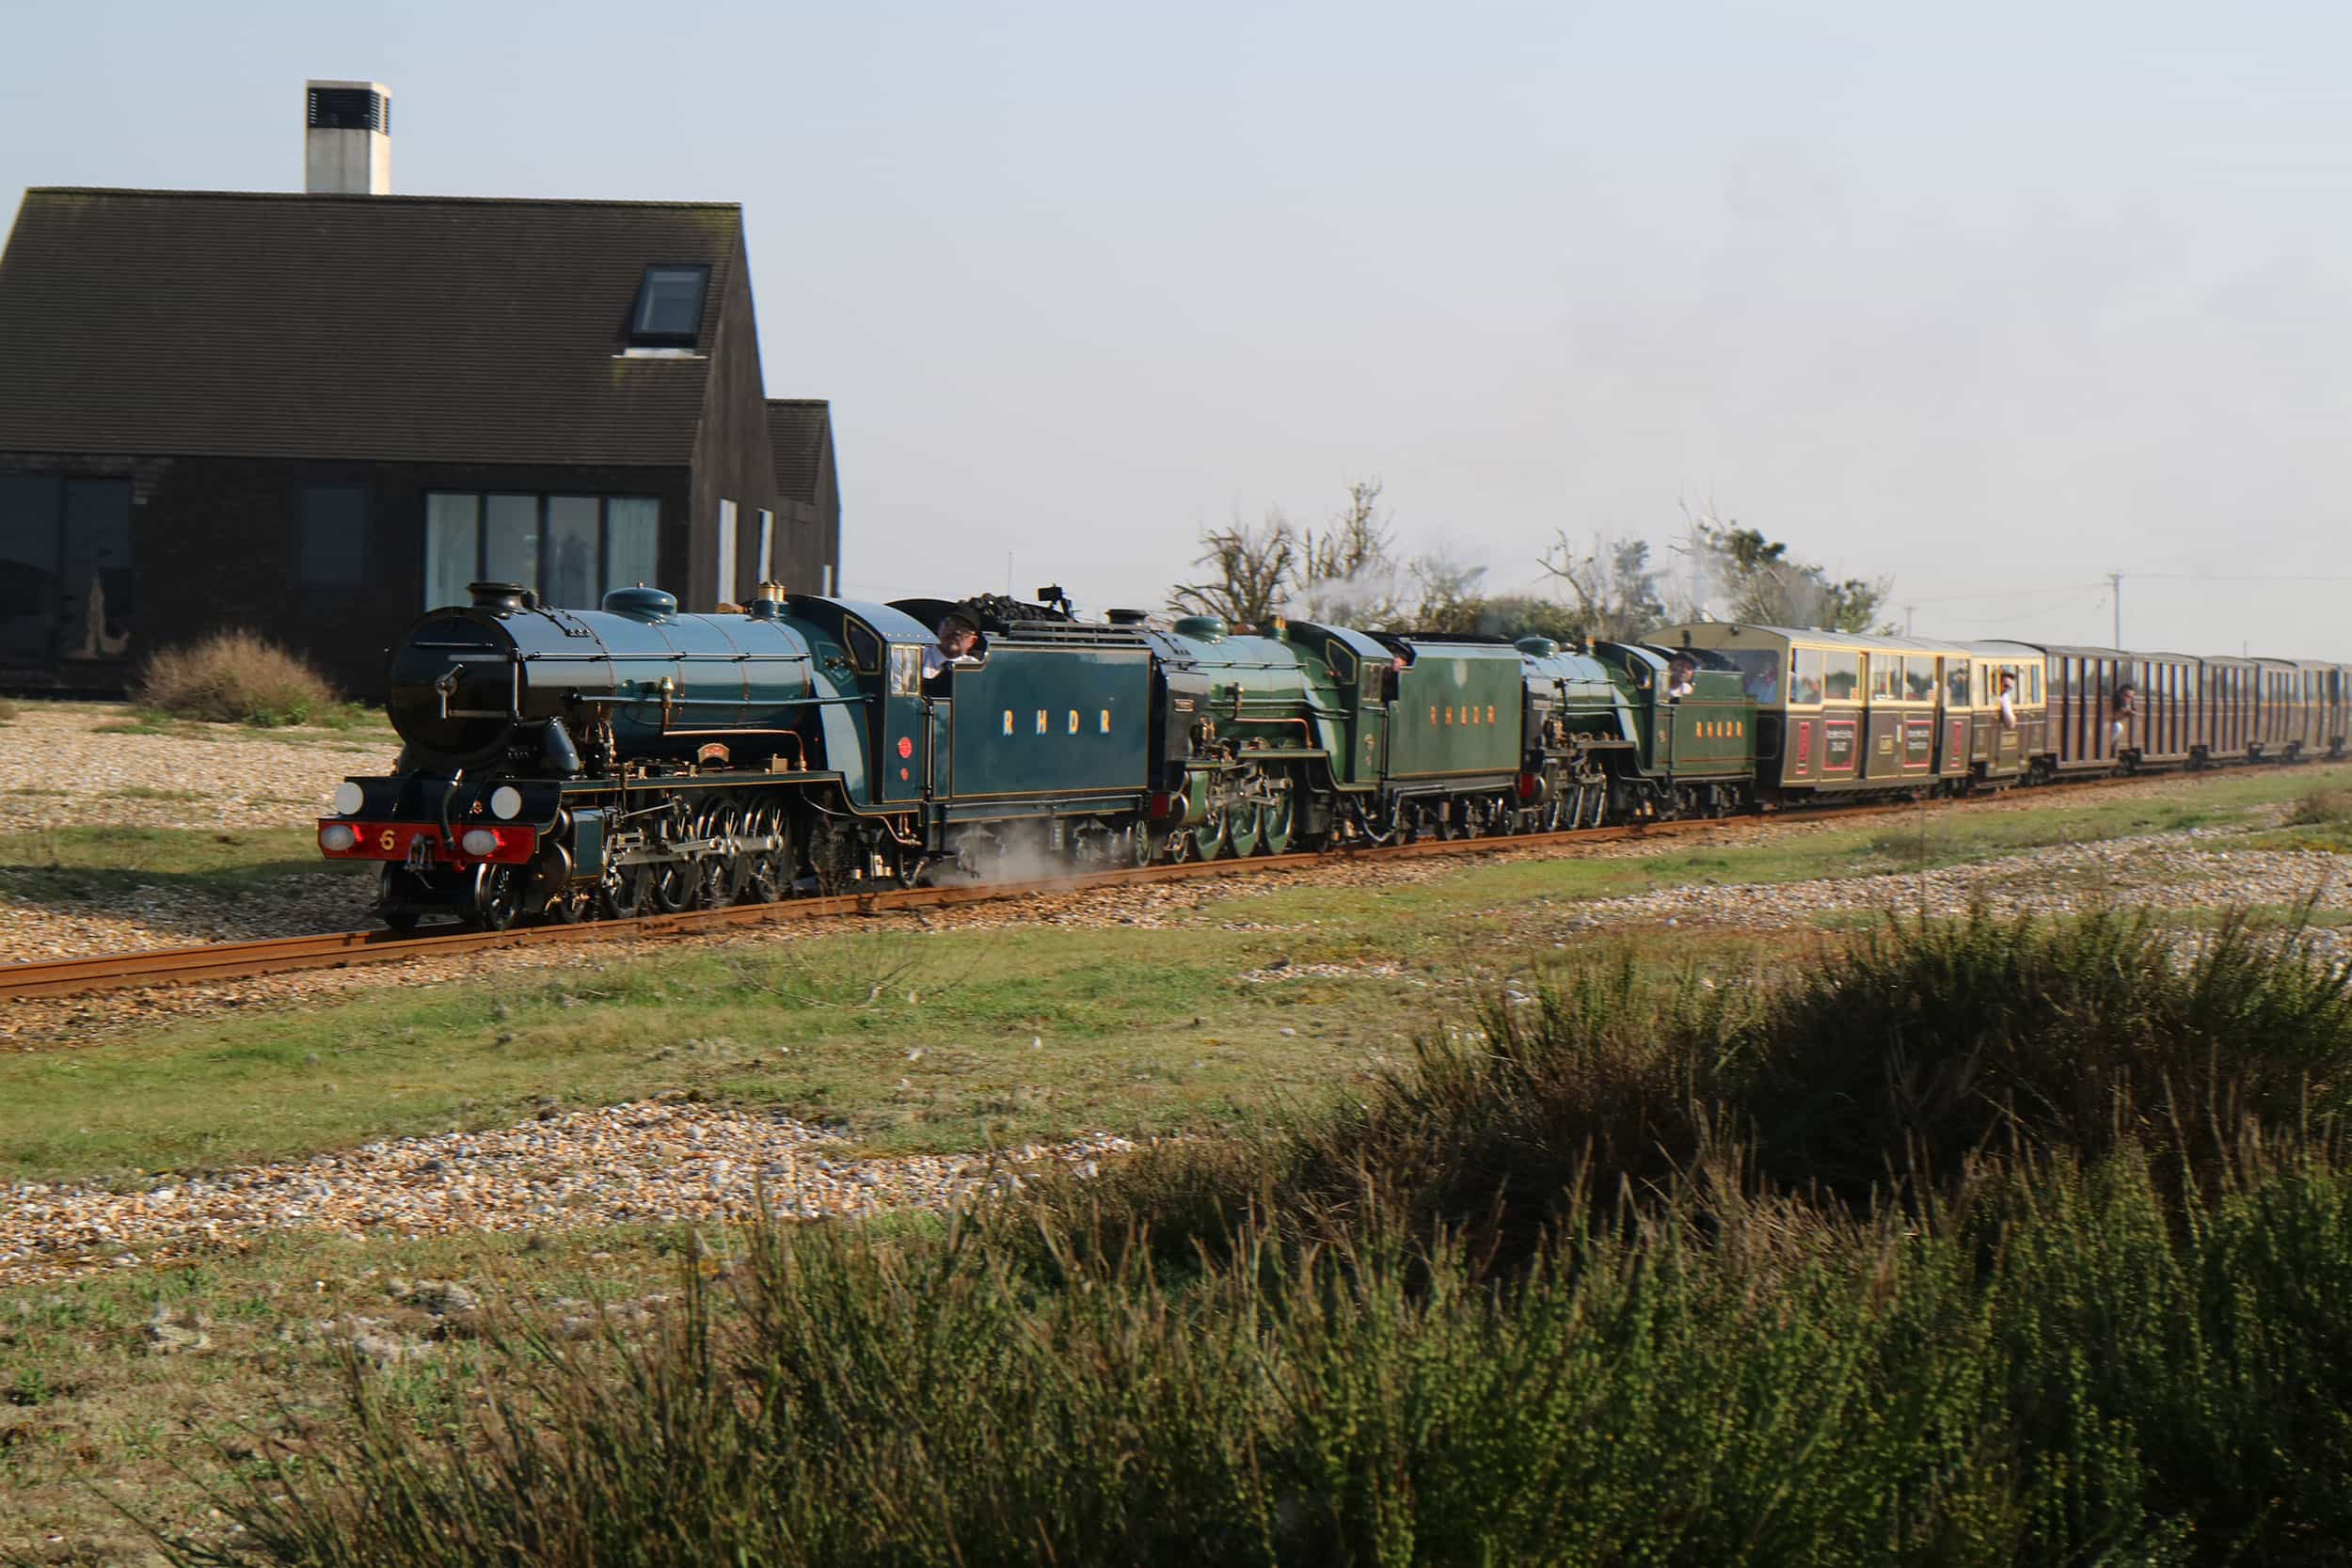 The locomotives at Romney, Hythe & Dymchurch Railway